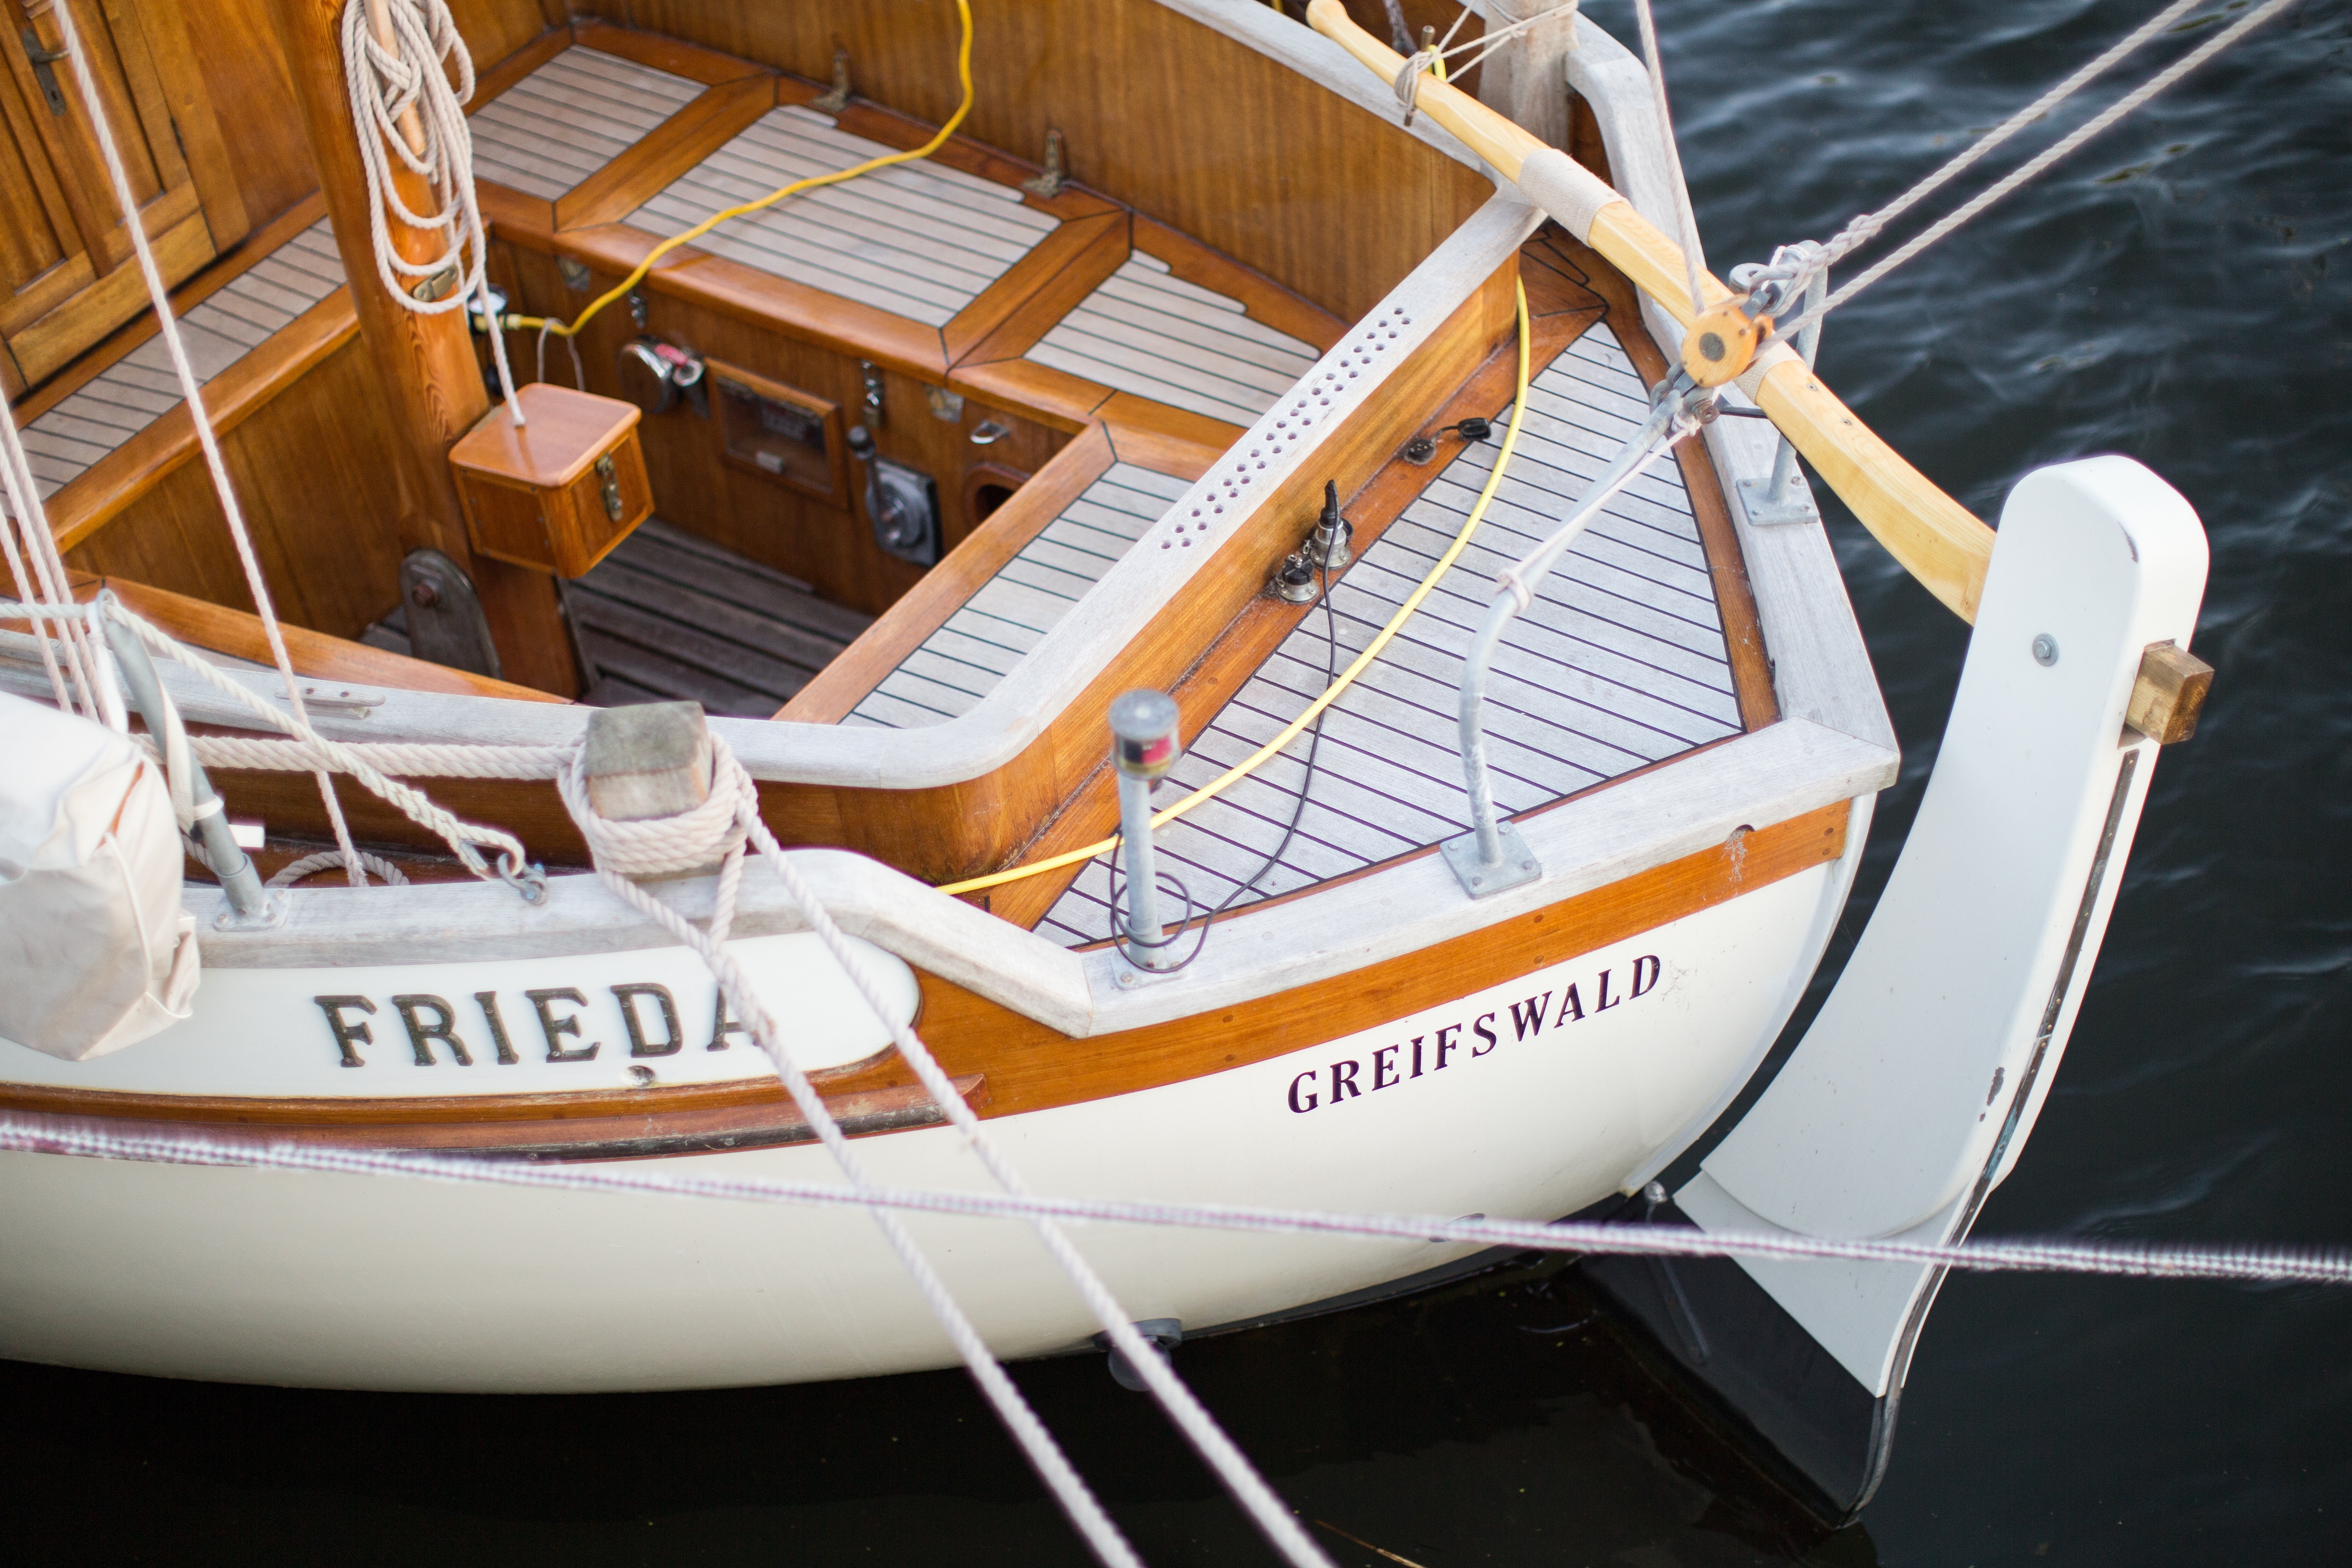 miscellanea, miscellaneous, yacht, vessel, frieda, greifswald High Definition image